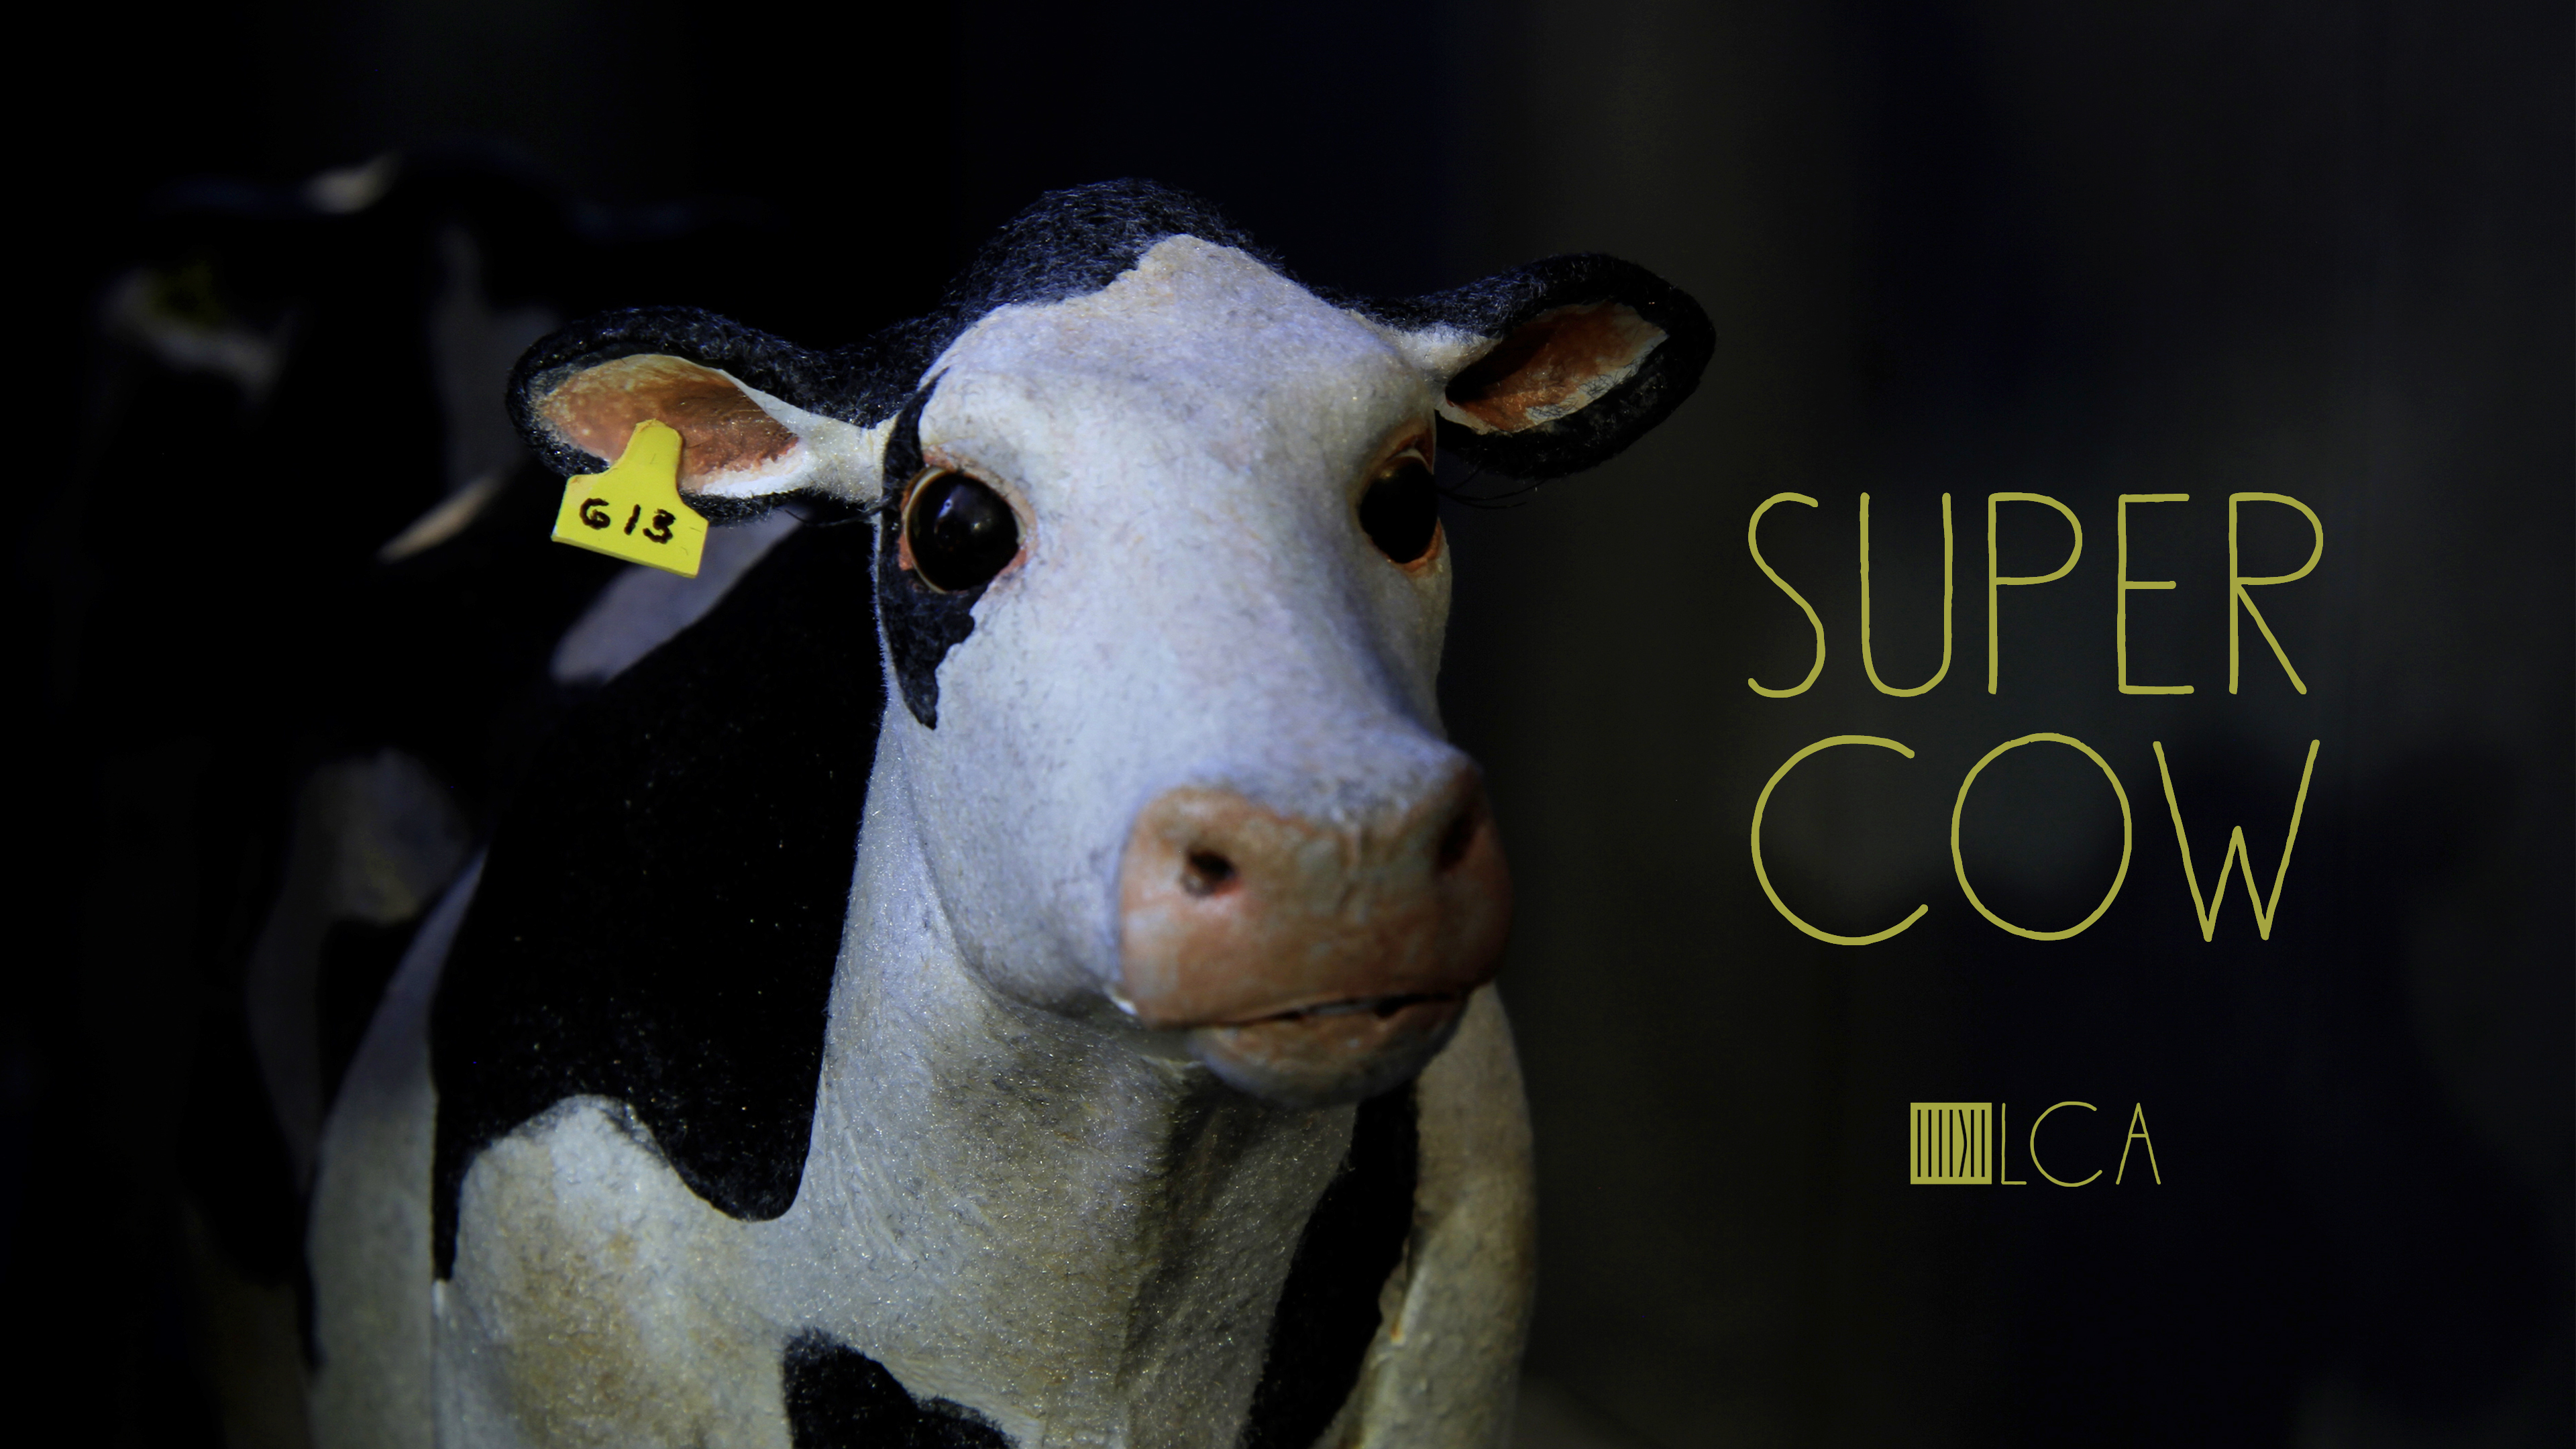 Watch LCA's PSA "Super Cow"